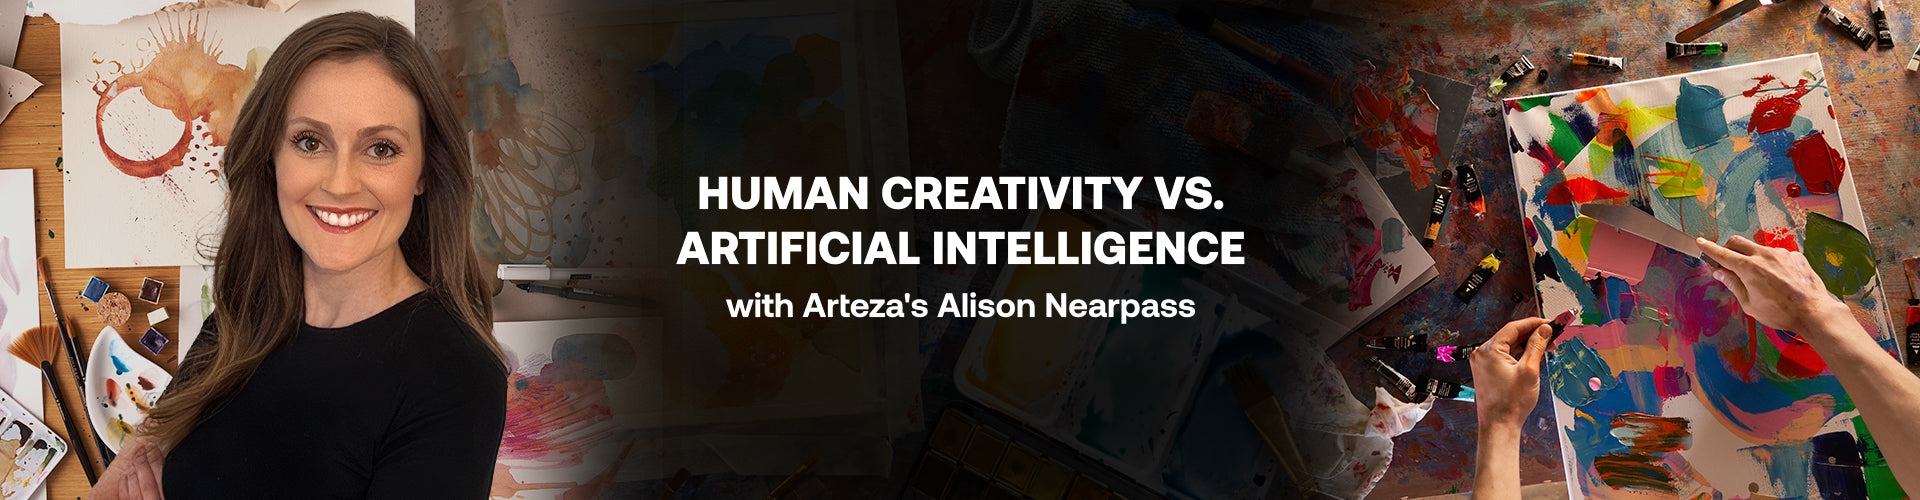 Human Creativity vs. Artificial Intelligence with Arteza's Alison Nearpass